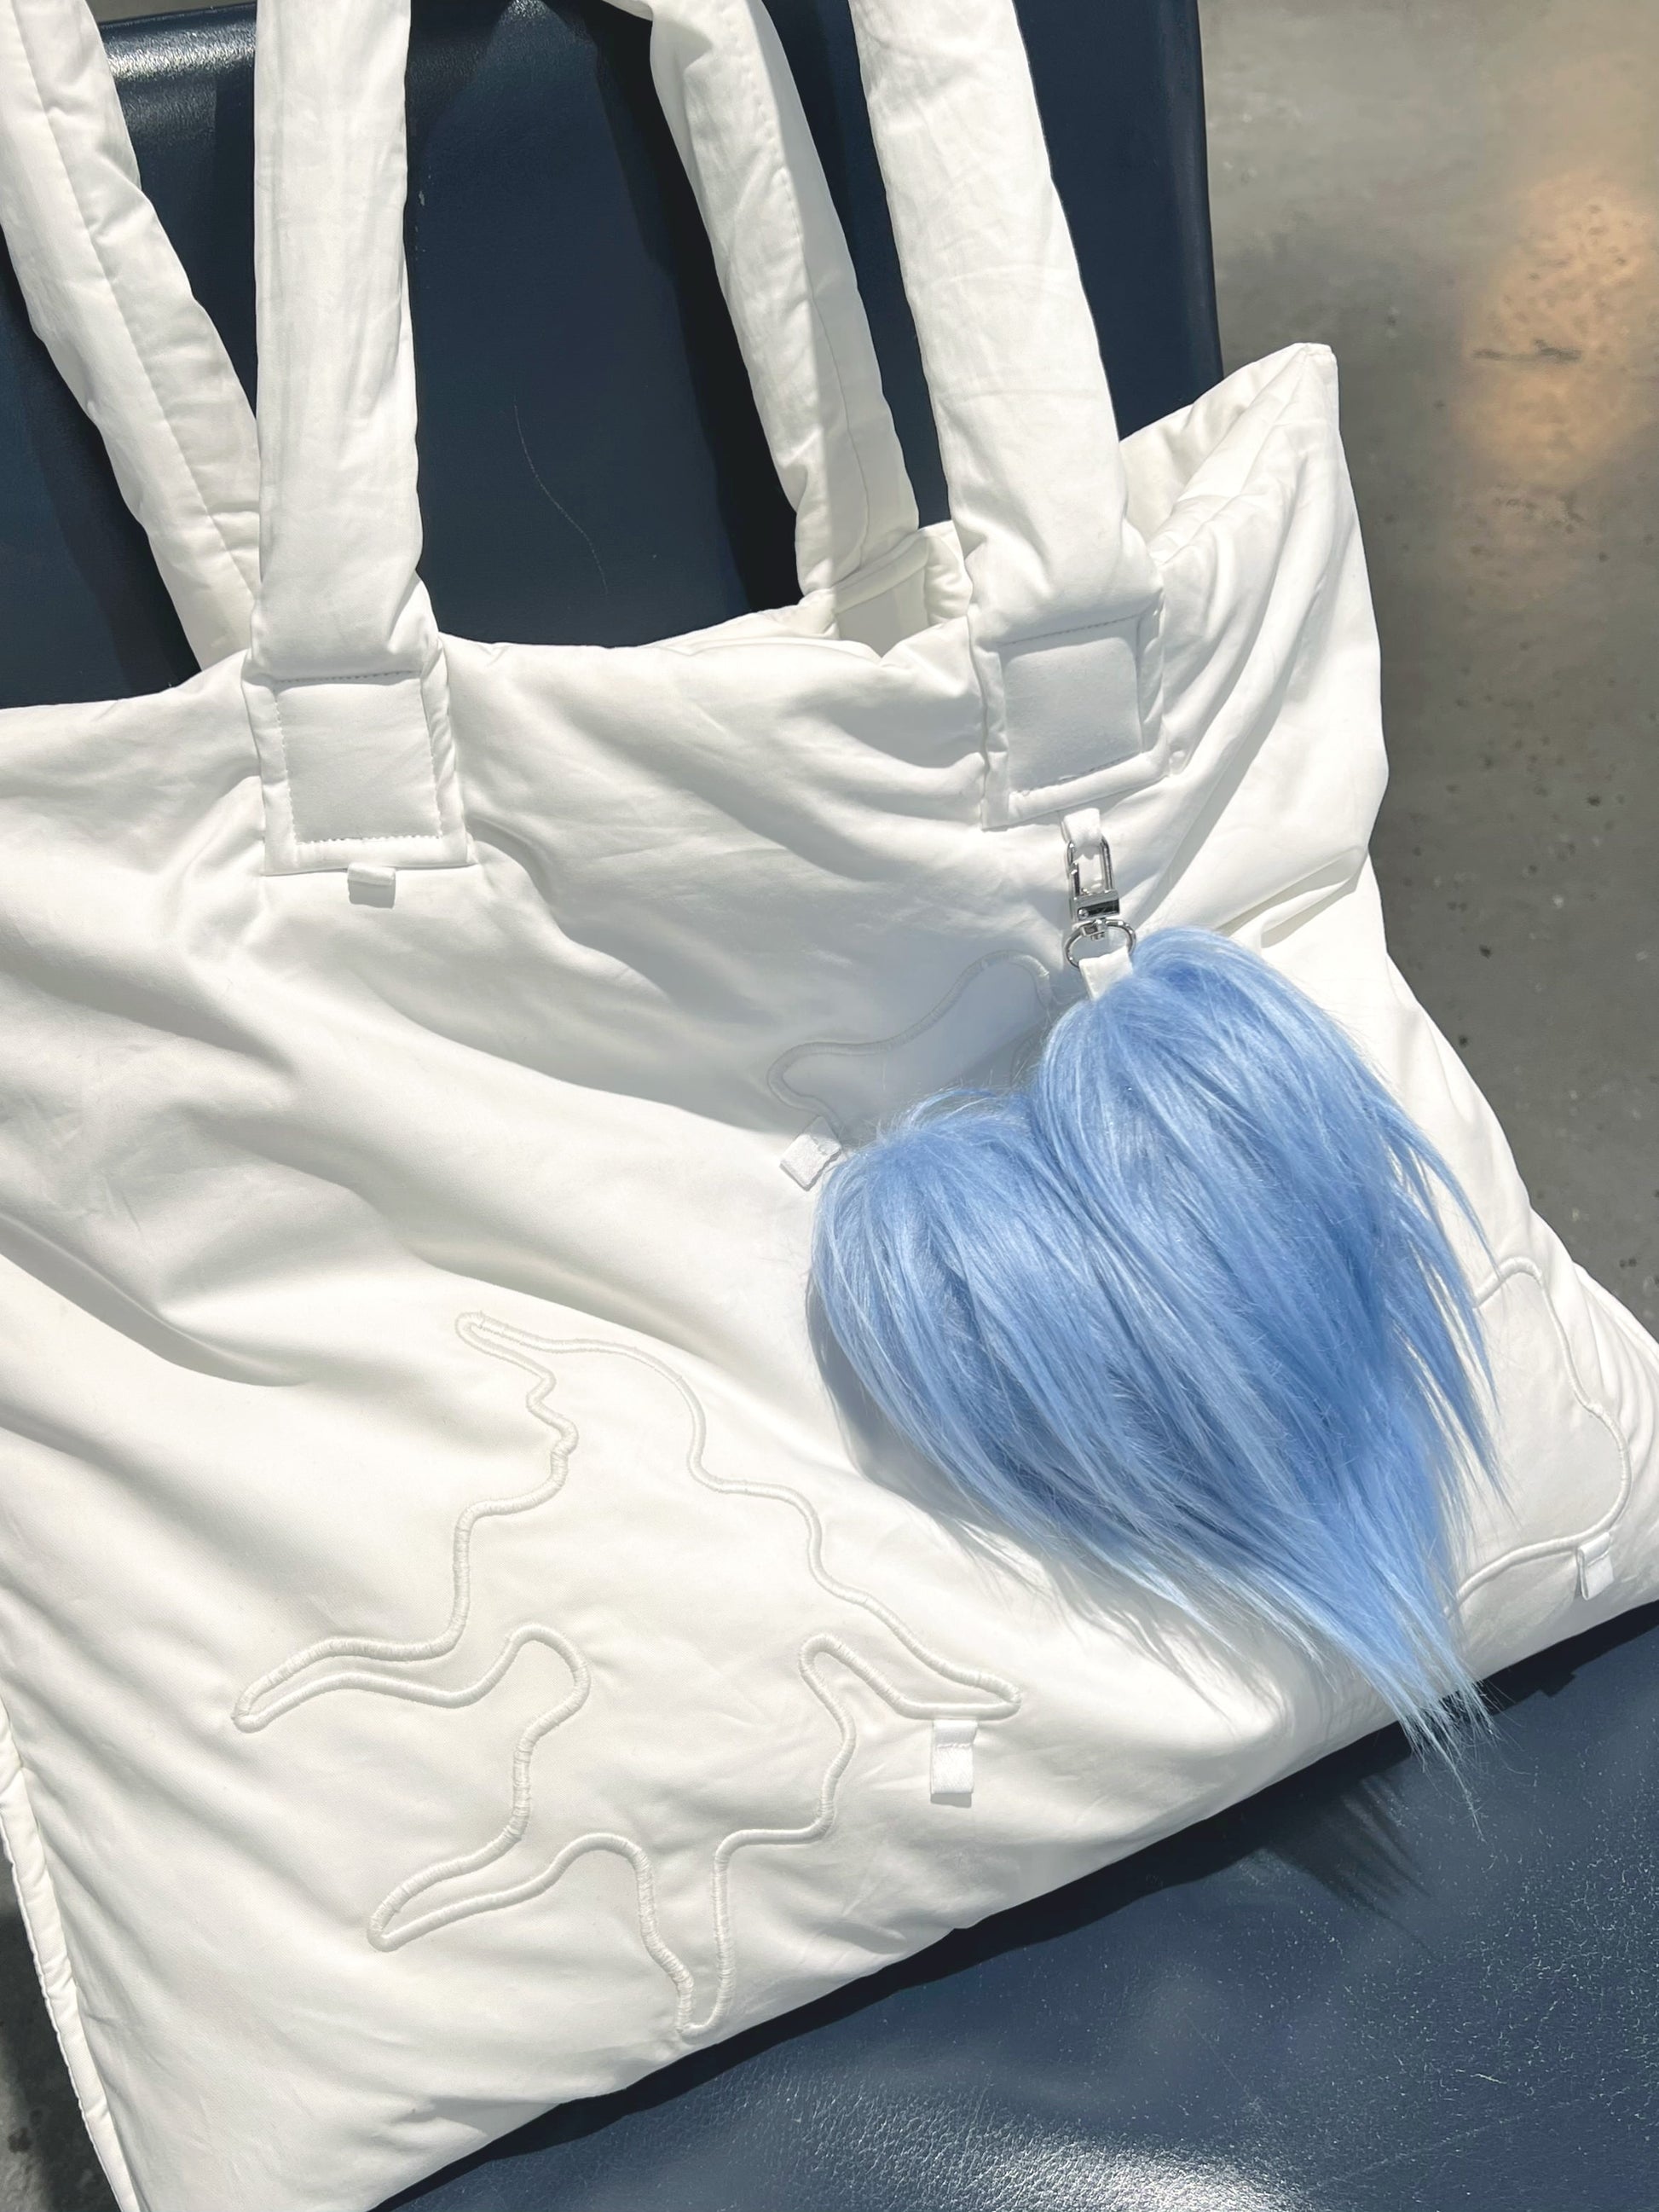 A Pure Heart Bag Charm – 2801project